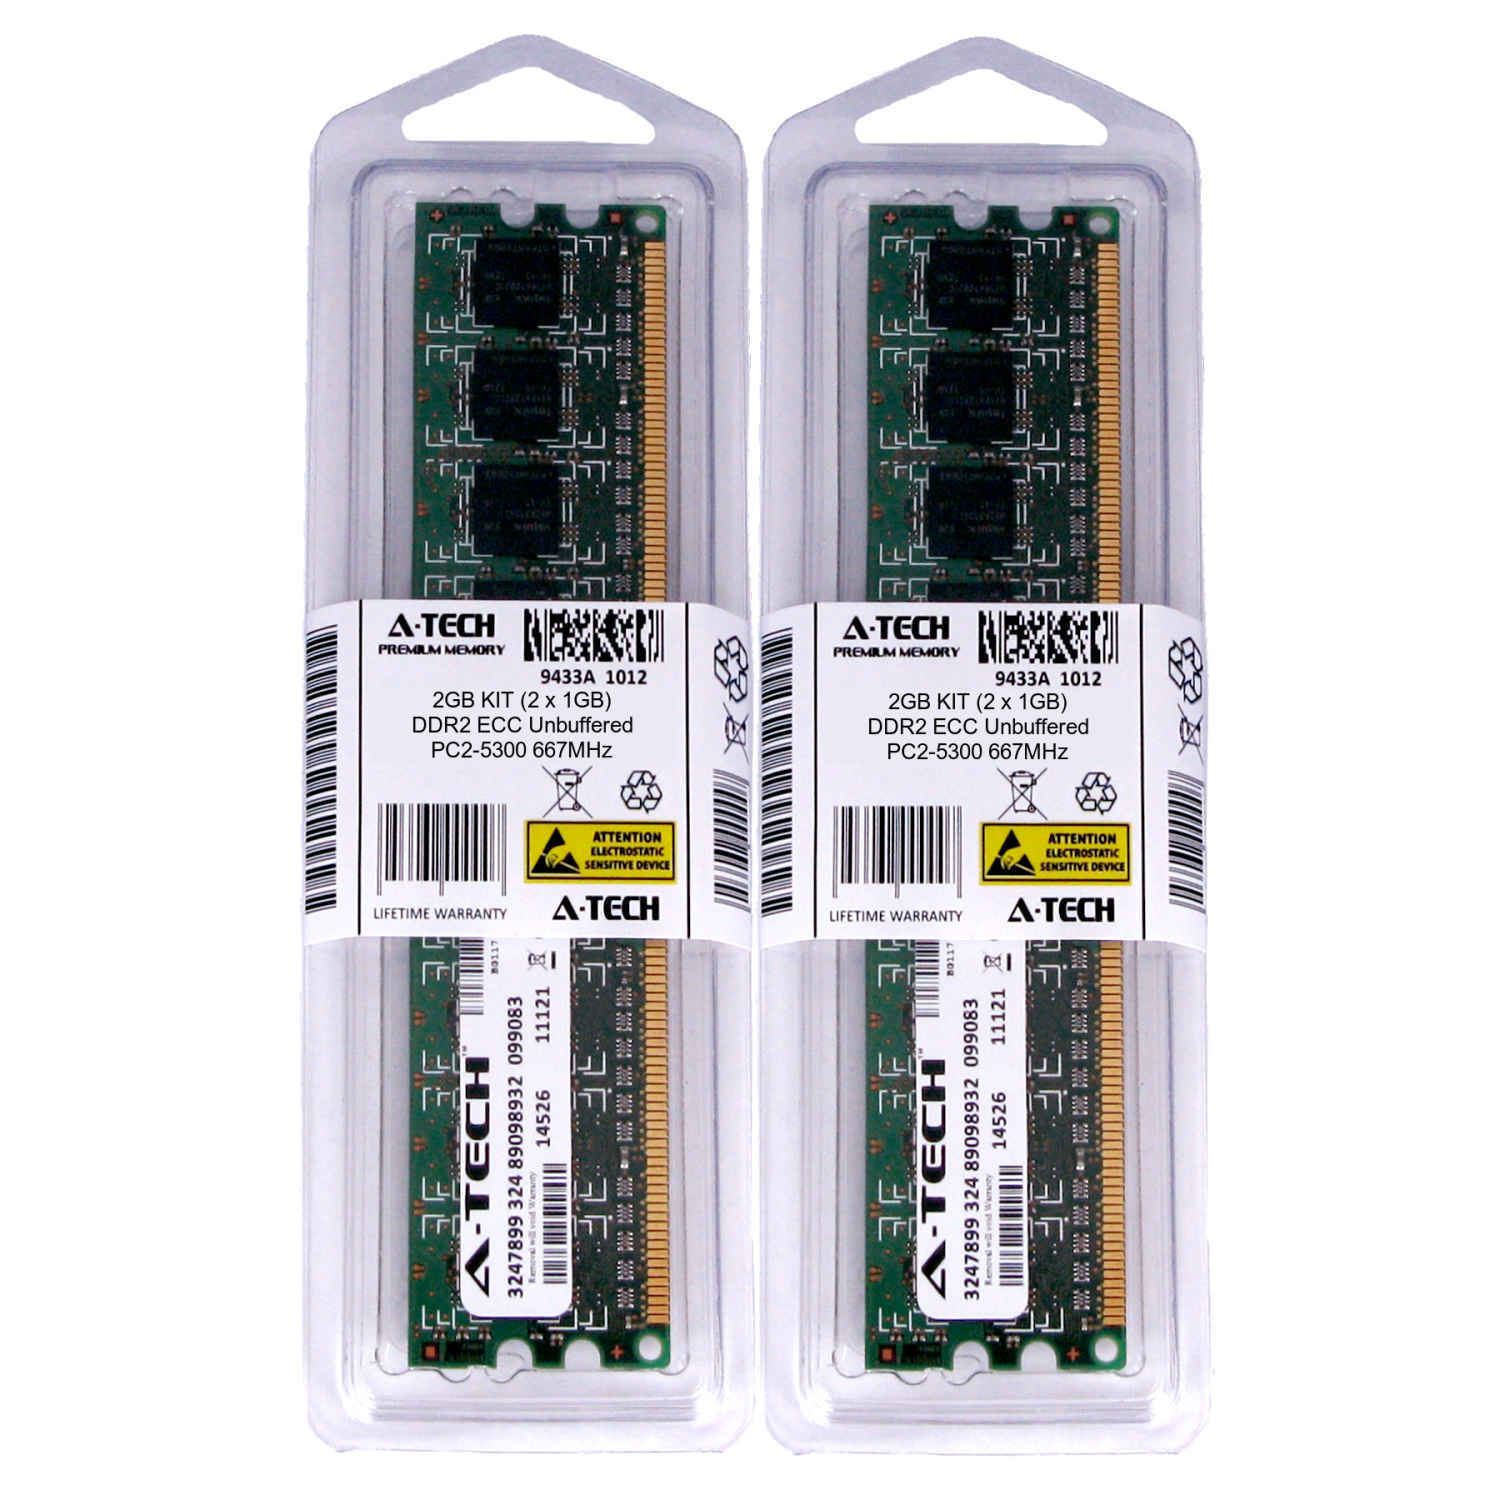 2GB KIT 2 x 1GB DIMM DDR2 ECC Unbuffered PC2-5300E 667MHz Server Memory RAM